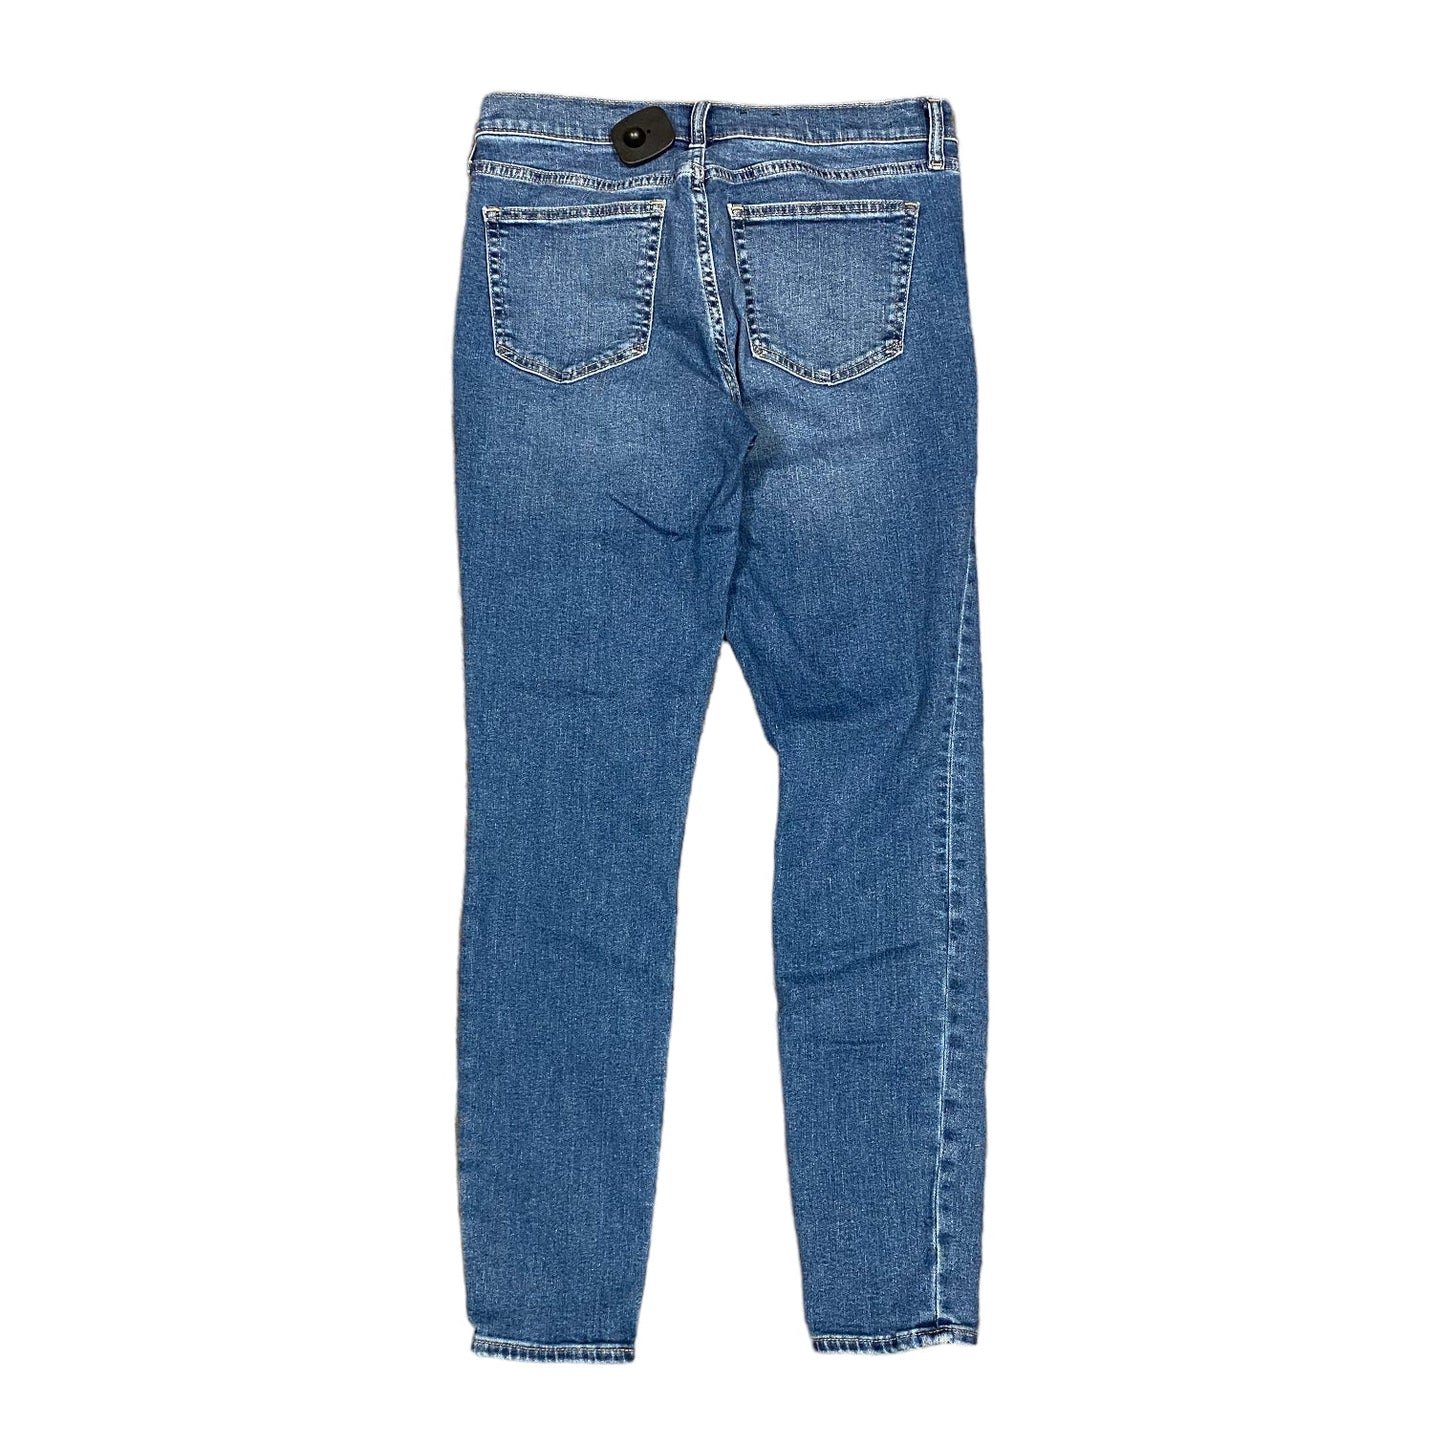 Jeans Skinny By Gap  Size: 6long